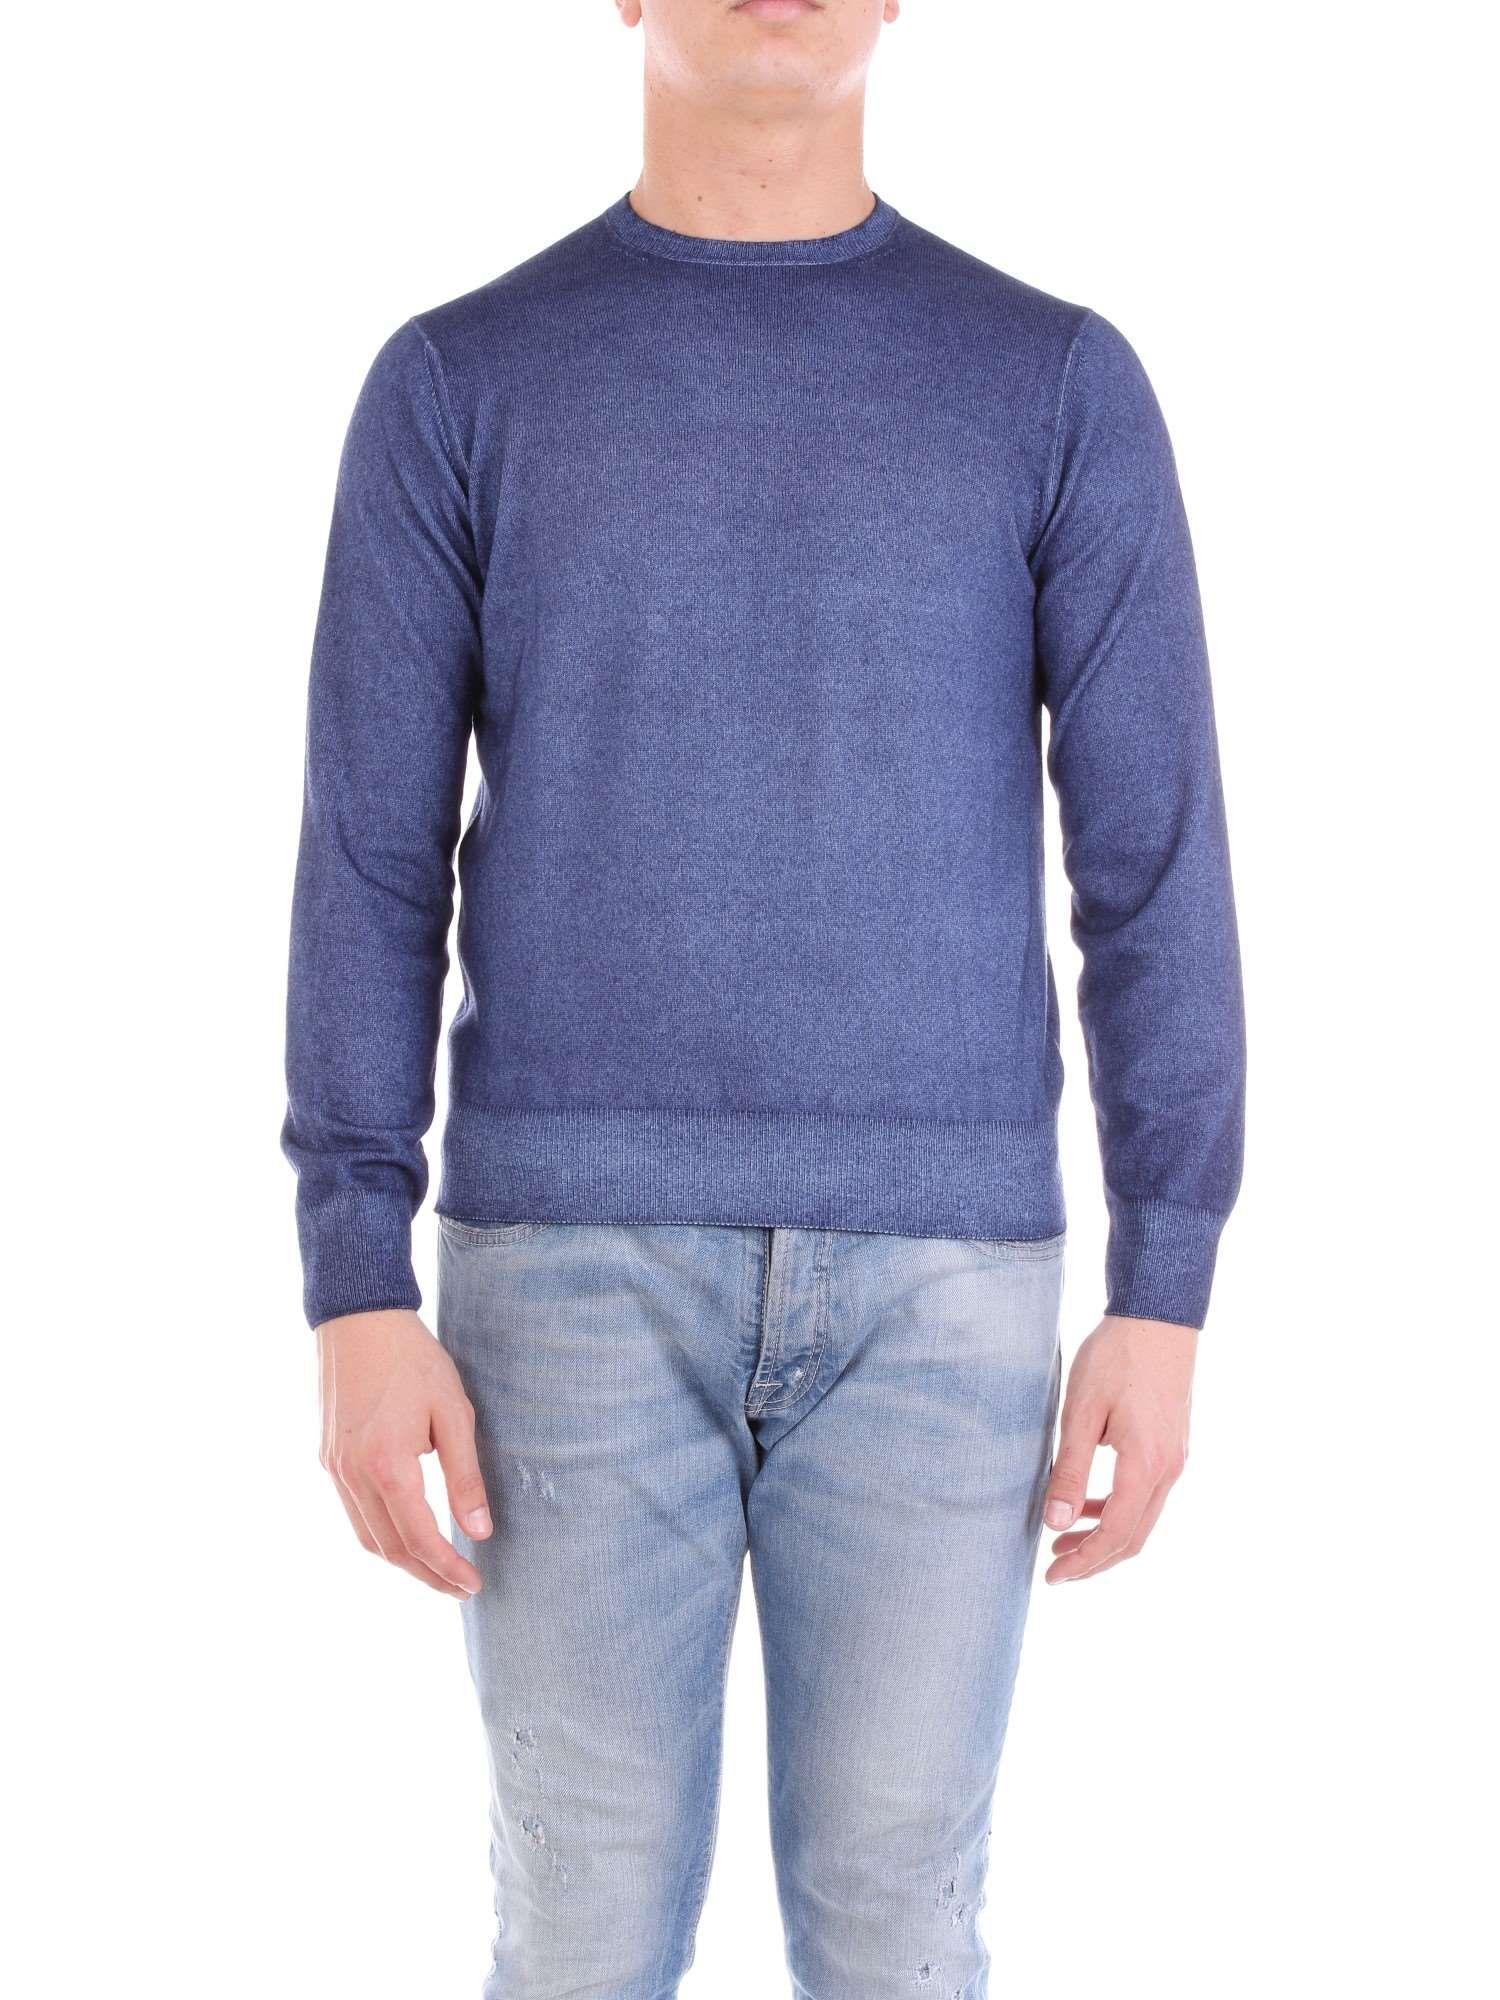 Cruciani Blue Cashmere Sweater in Blue for Men - Lyst